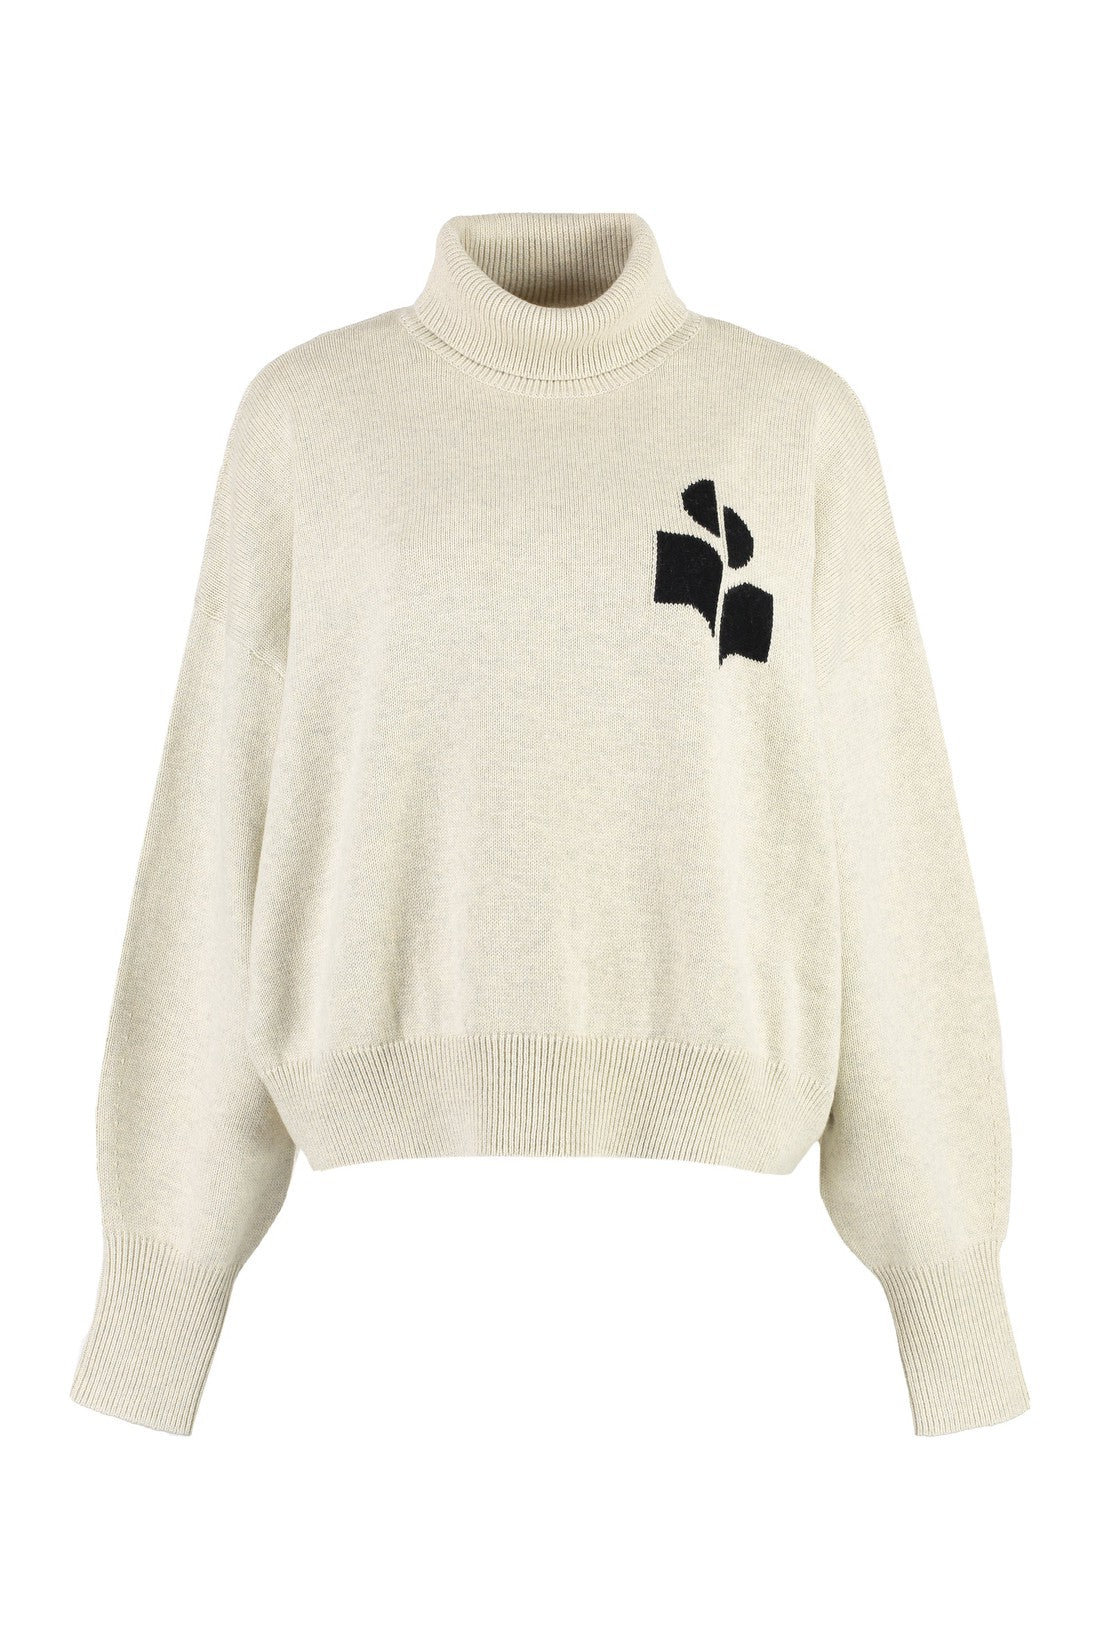 Isabel Marant Étoile-OUTLET-SALE-Nash Wool blend turtleneck sweater-ARCHIVIST